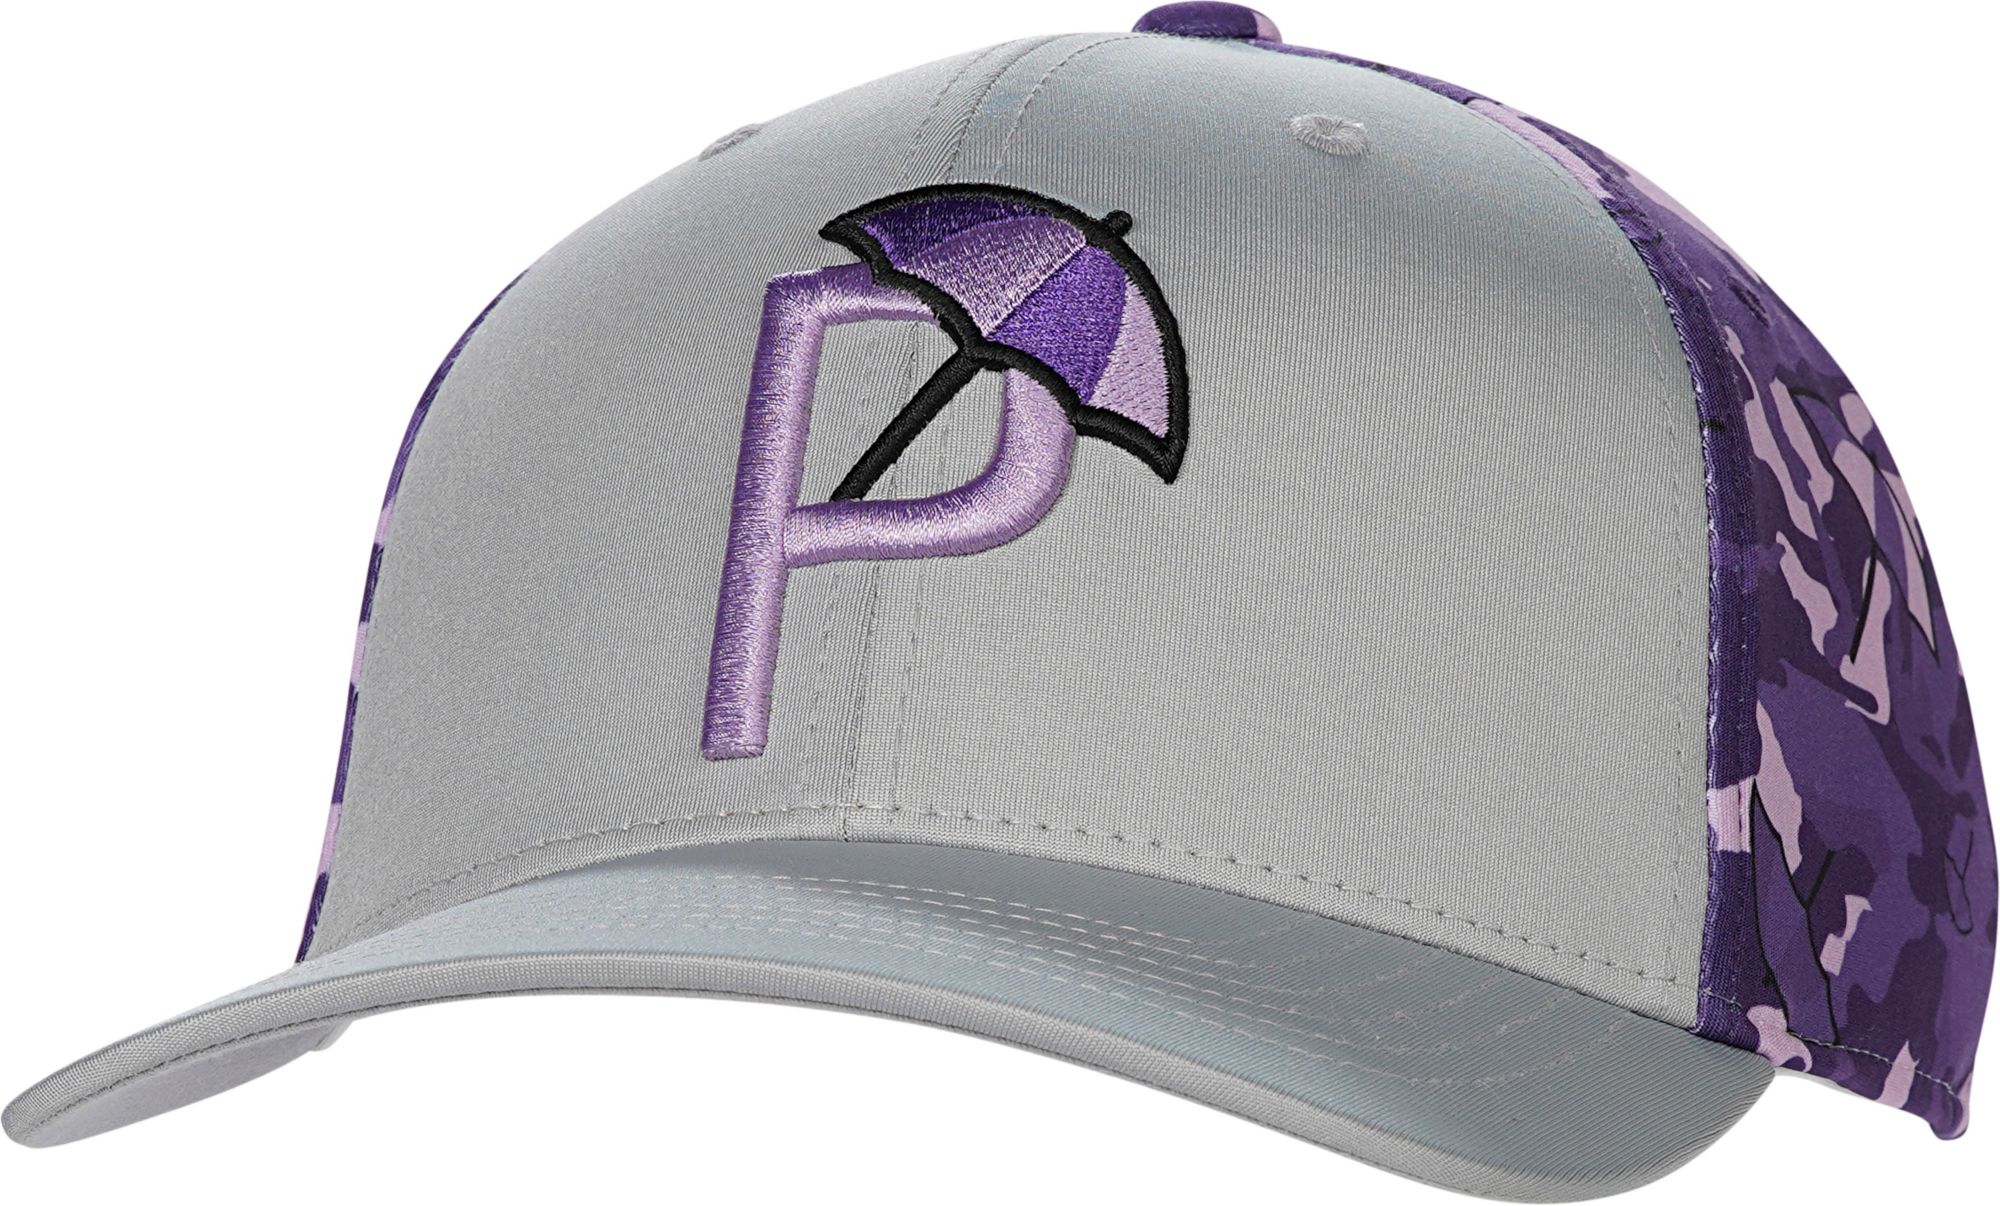 purple puma hat